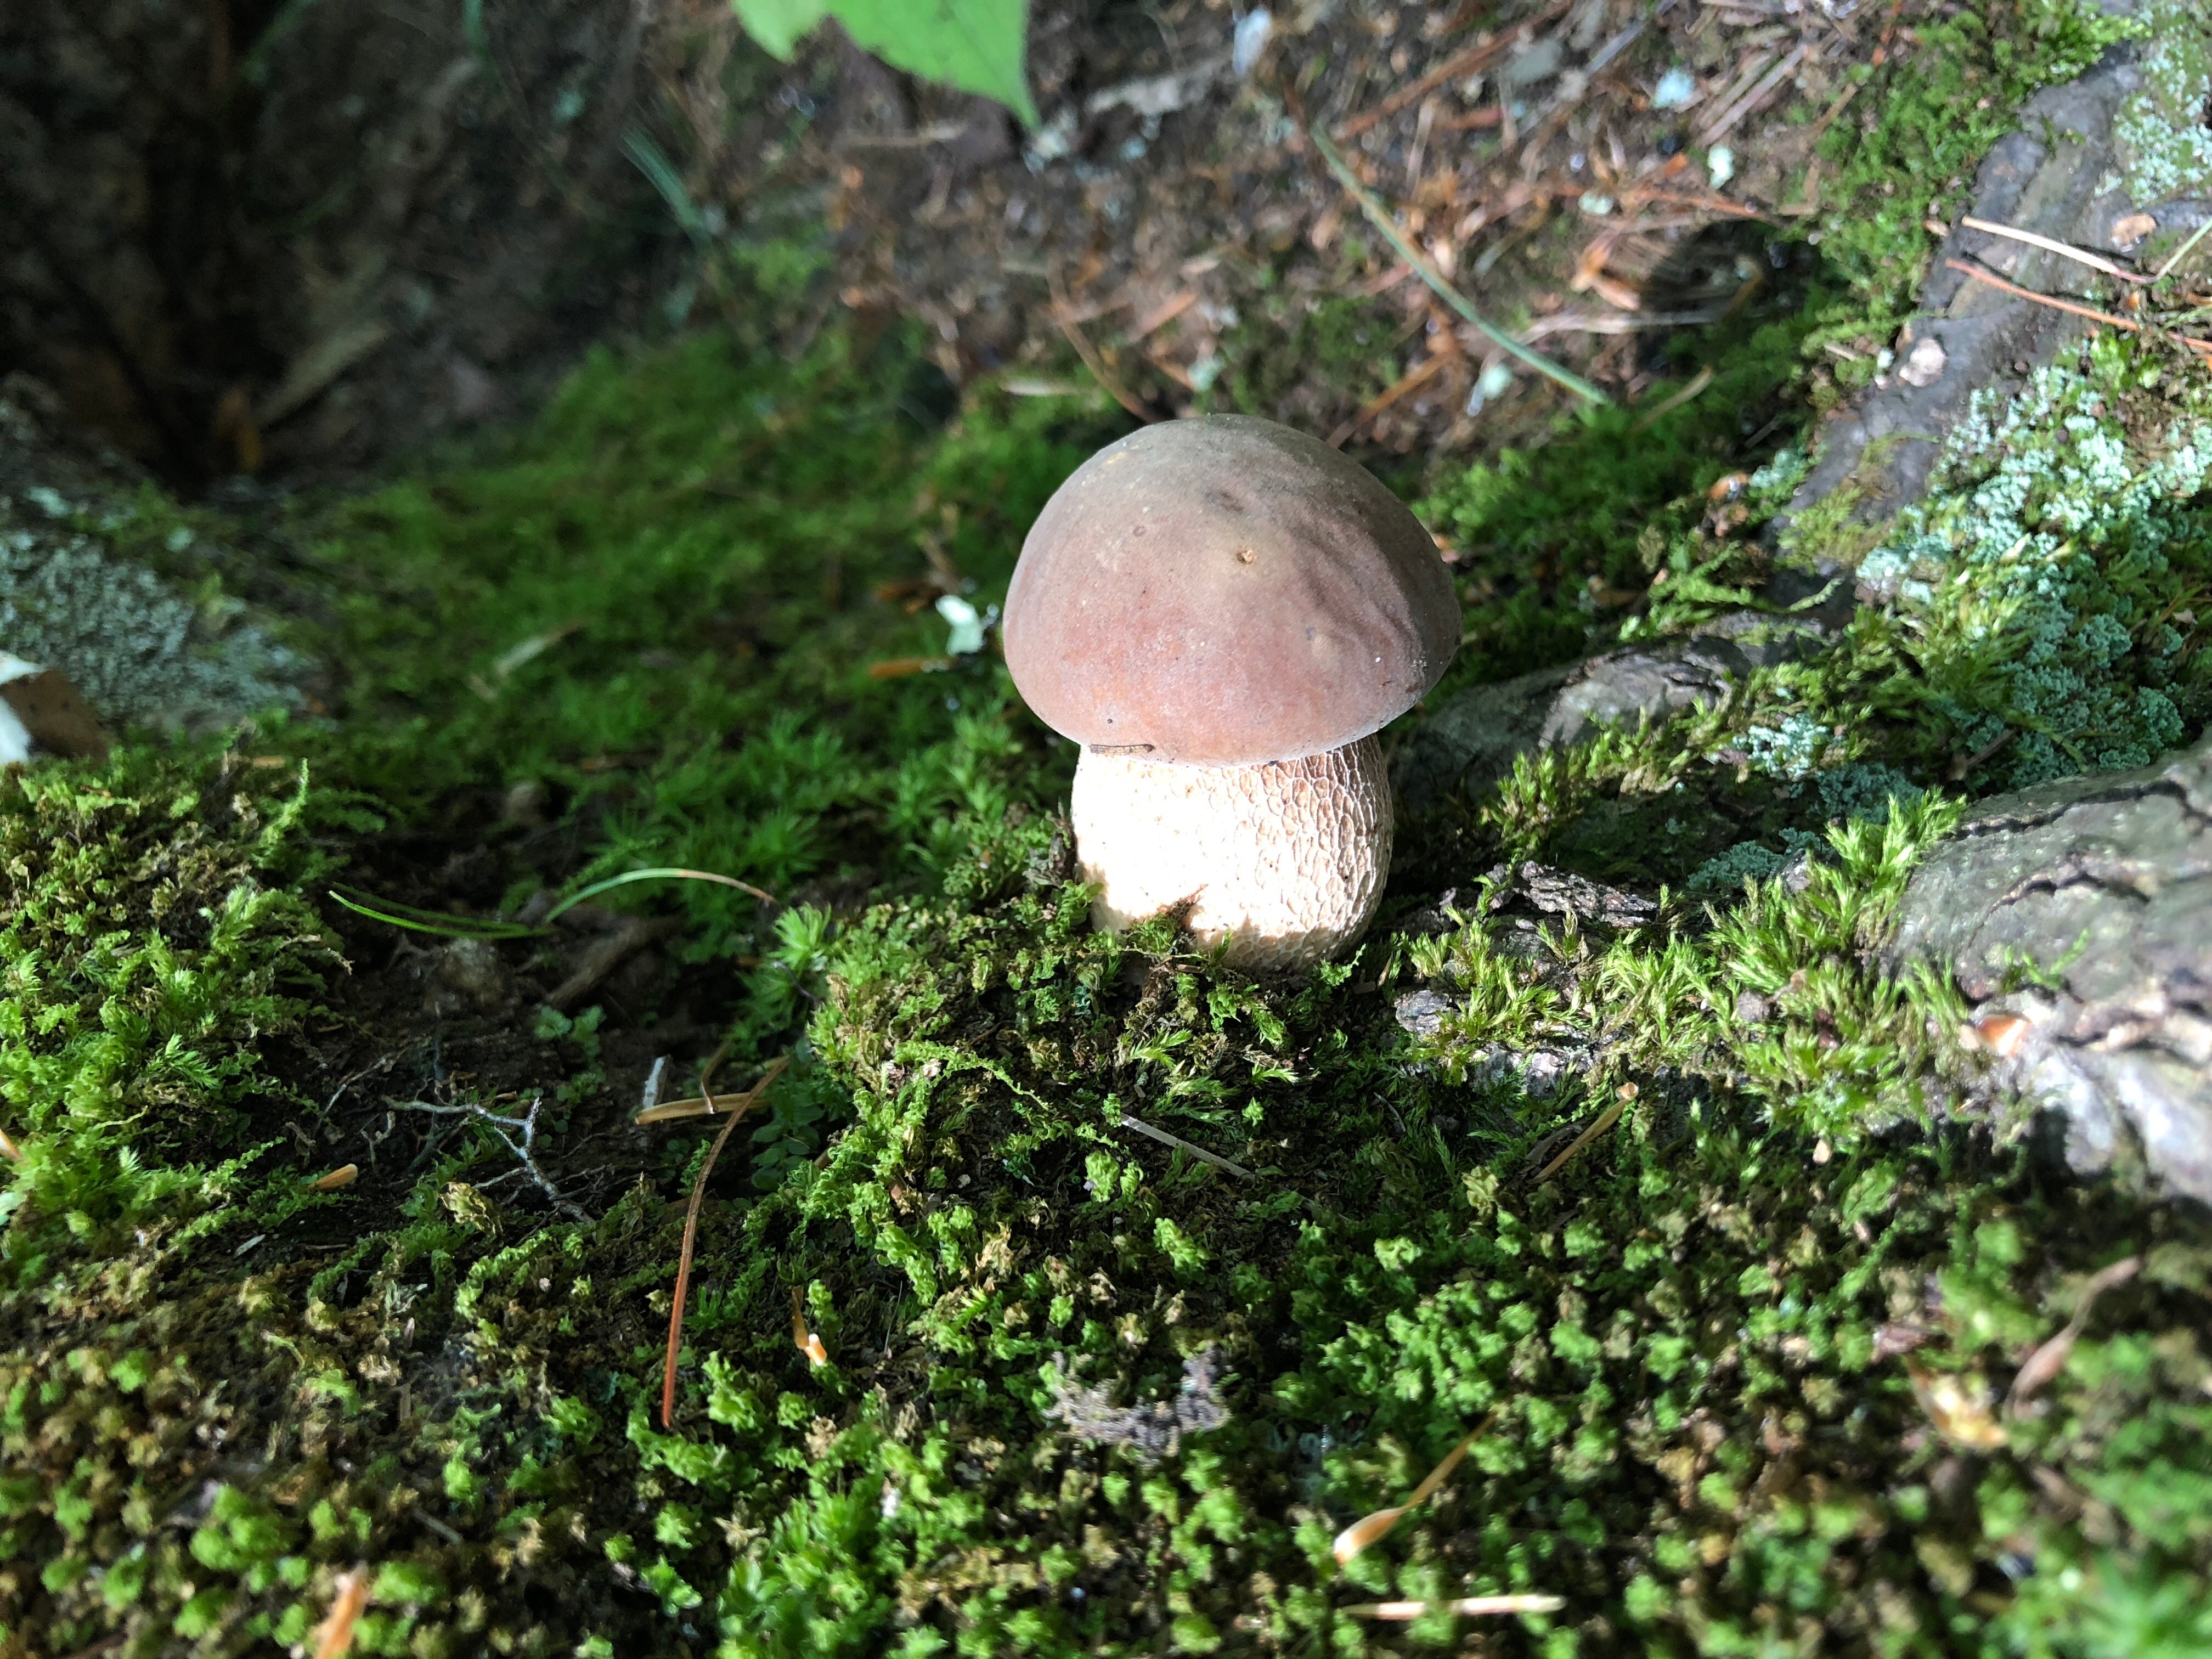 Lots of fun little fungi growing here